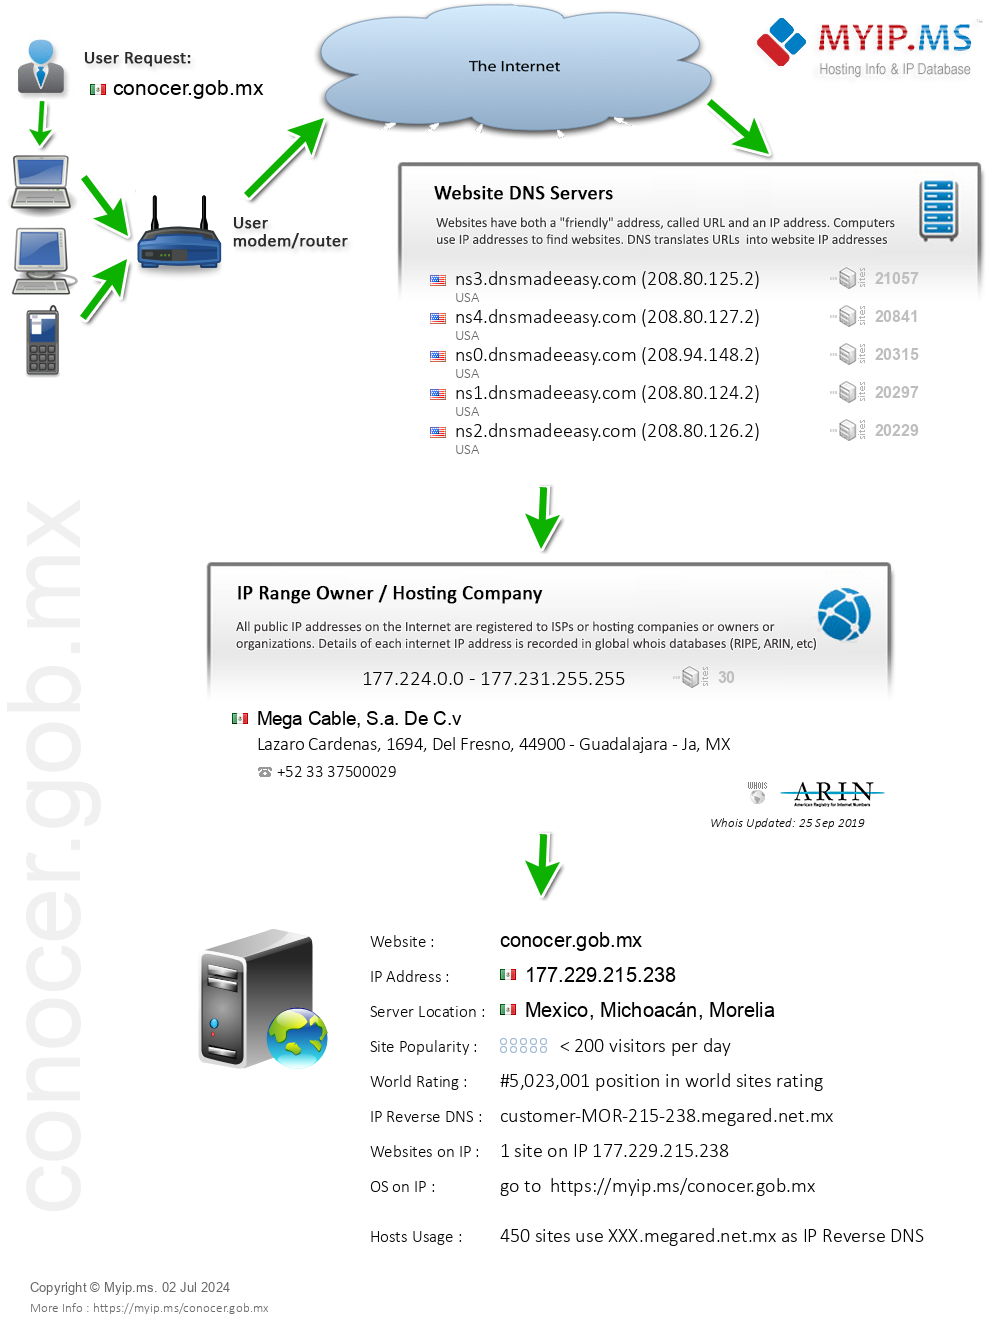 Conocer.gob.mx - Website Hosting Visual IP Diagram